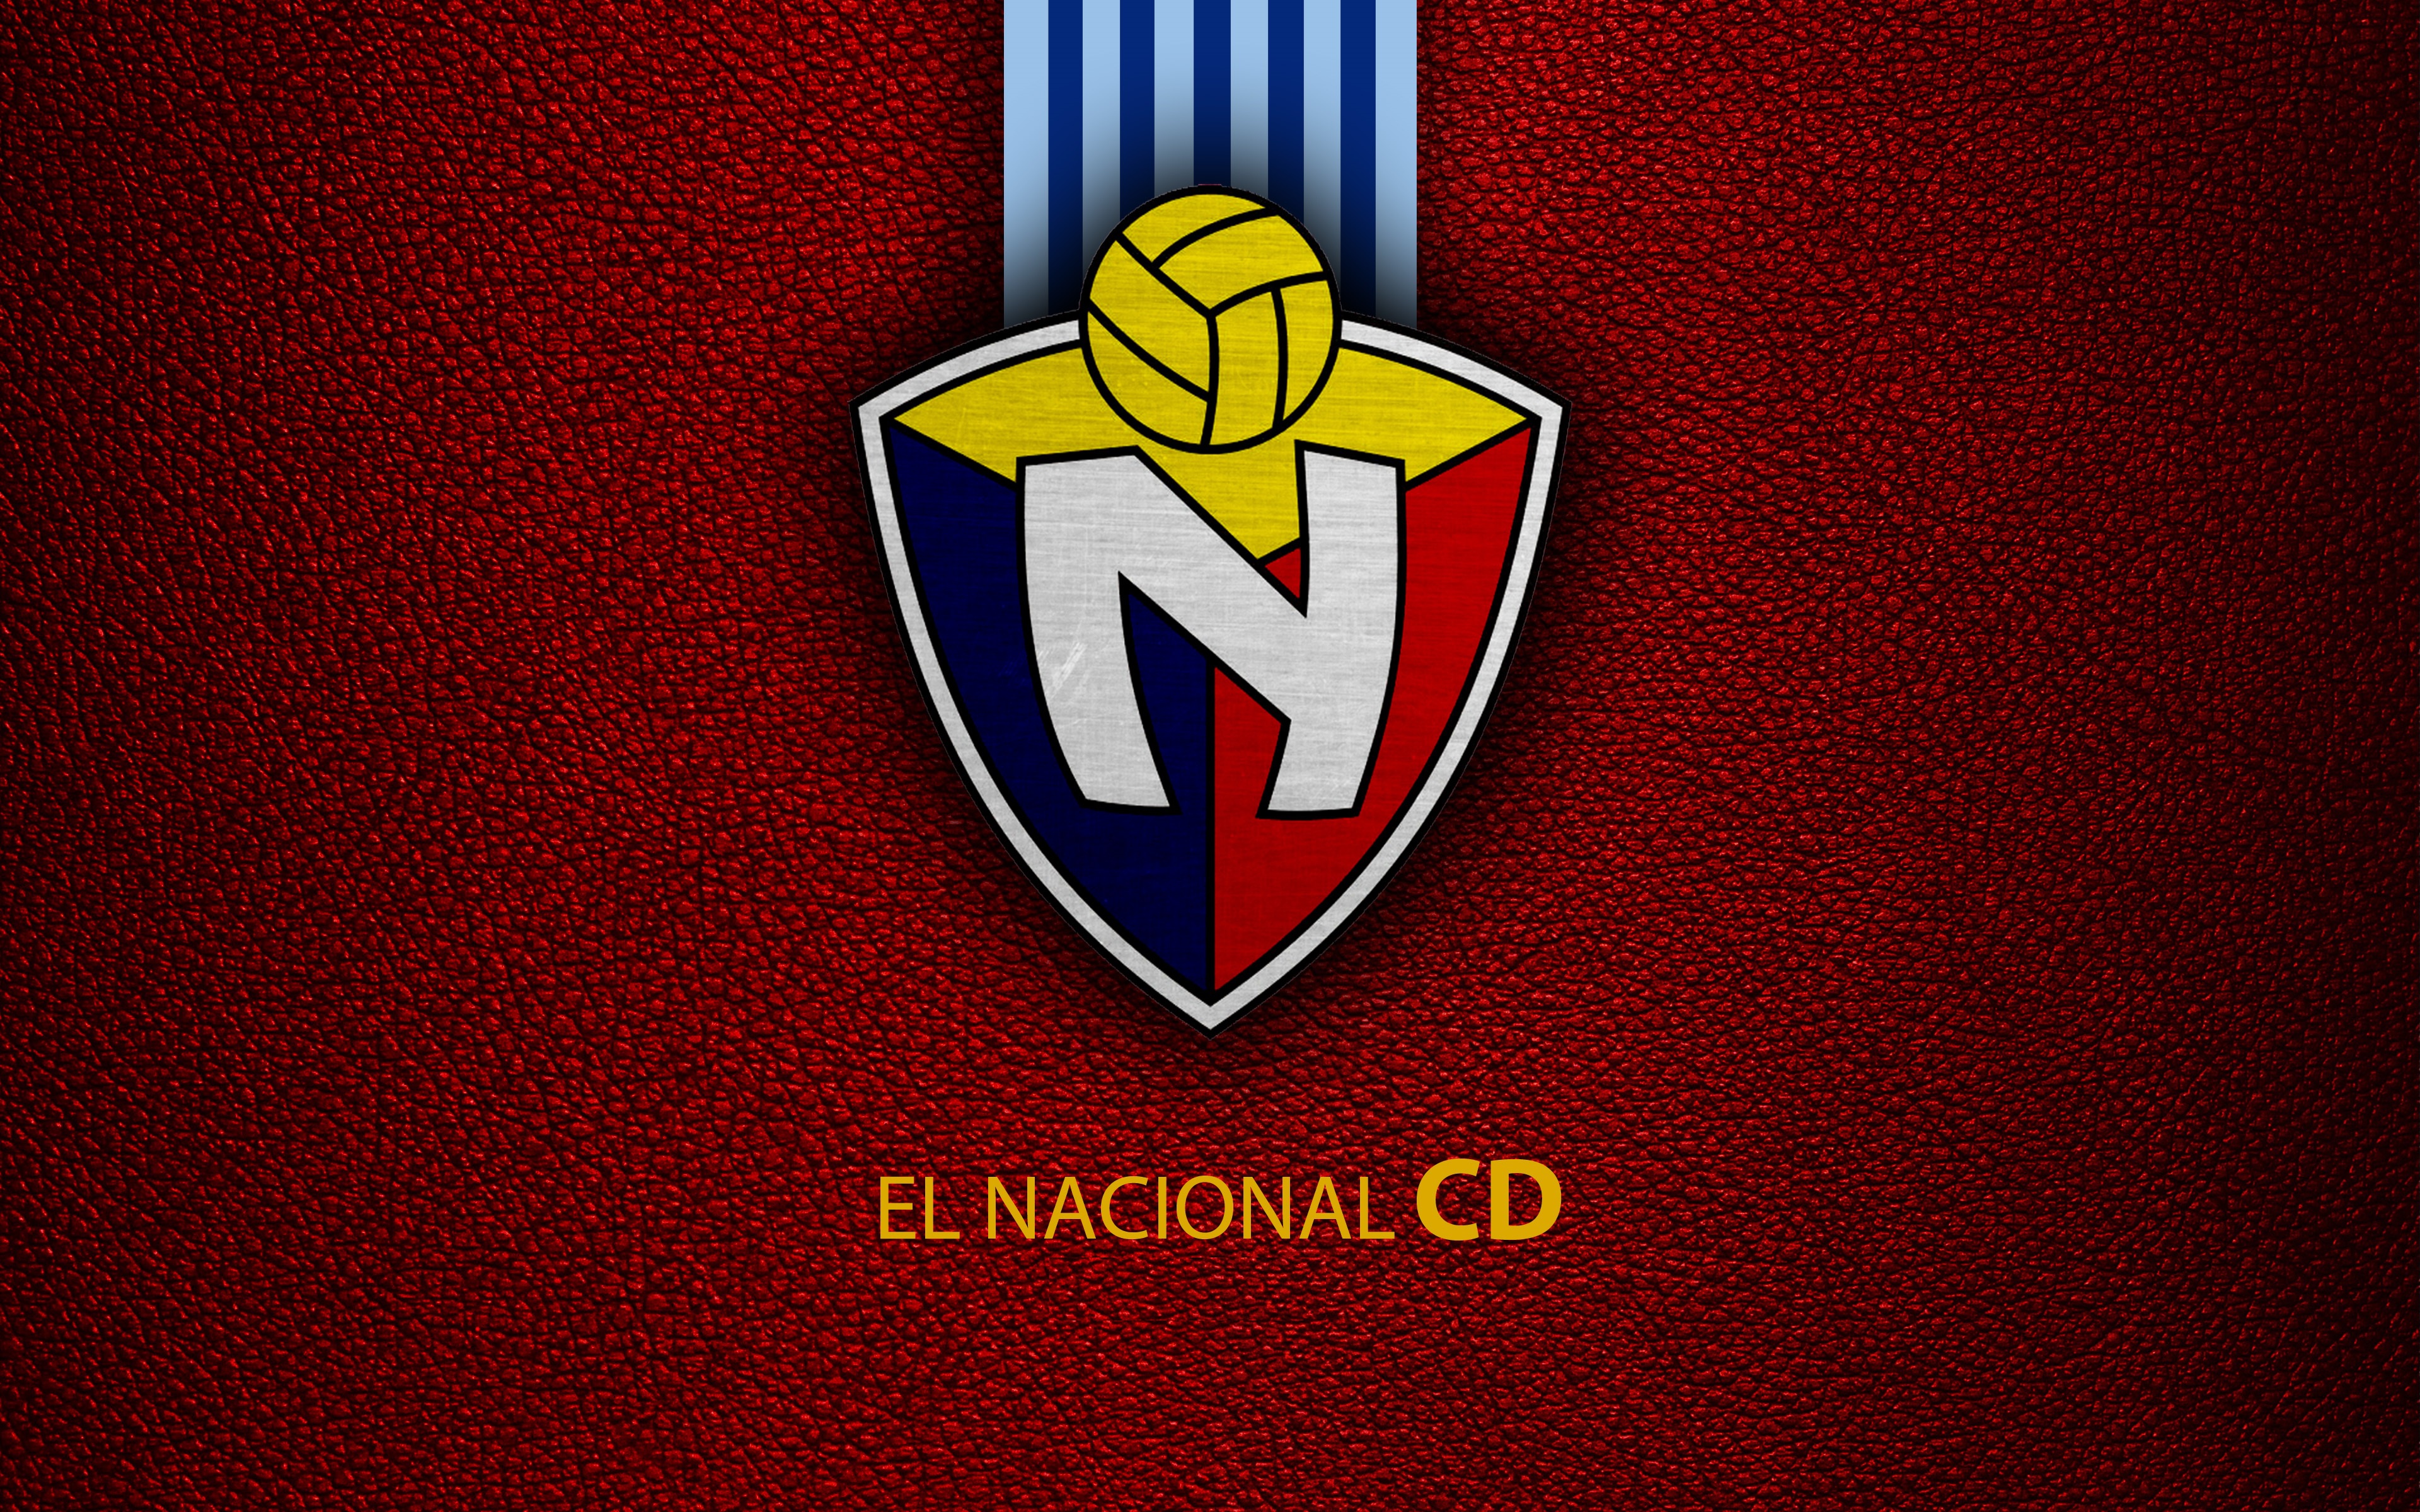 Национал 4. CD Nacional FC. FC Nacional logo. Emblem Football Ecuador. FC Ecuador logo.